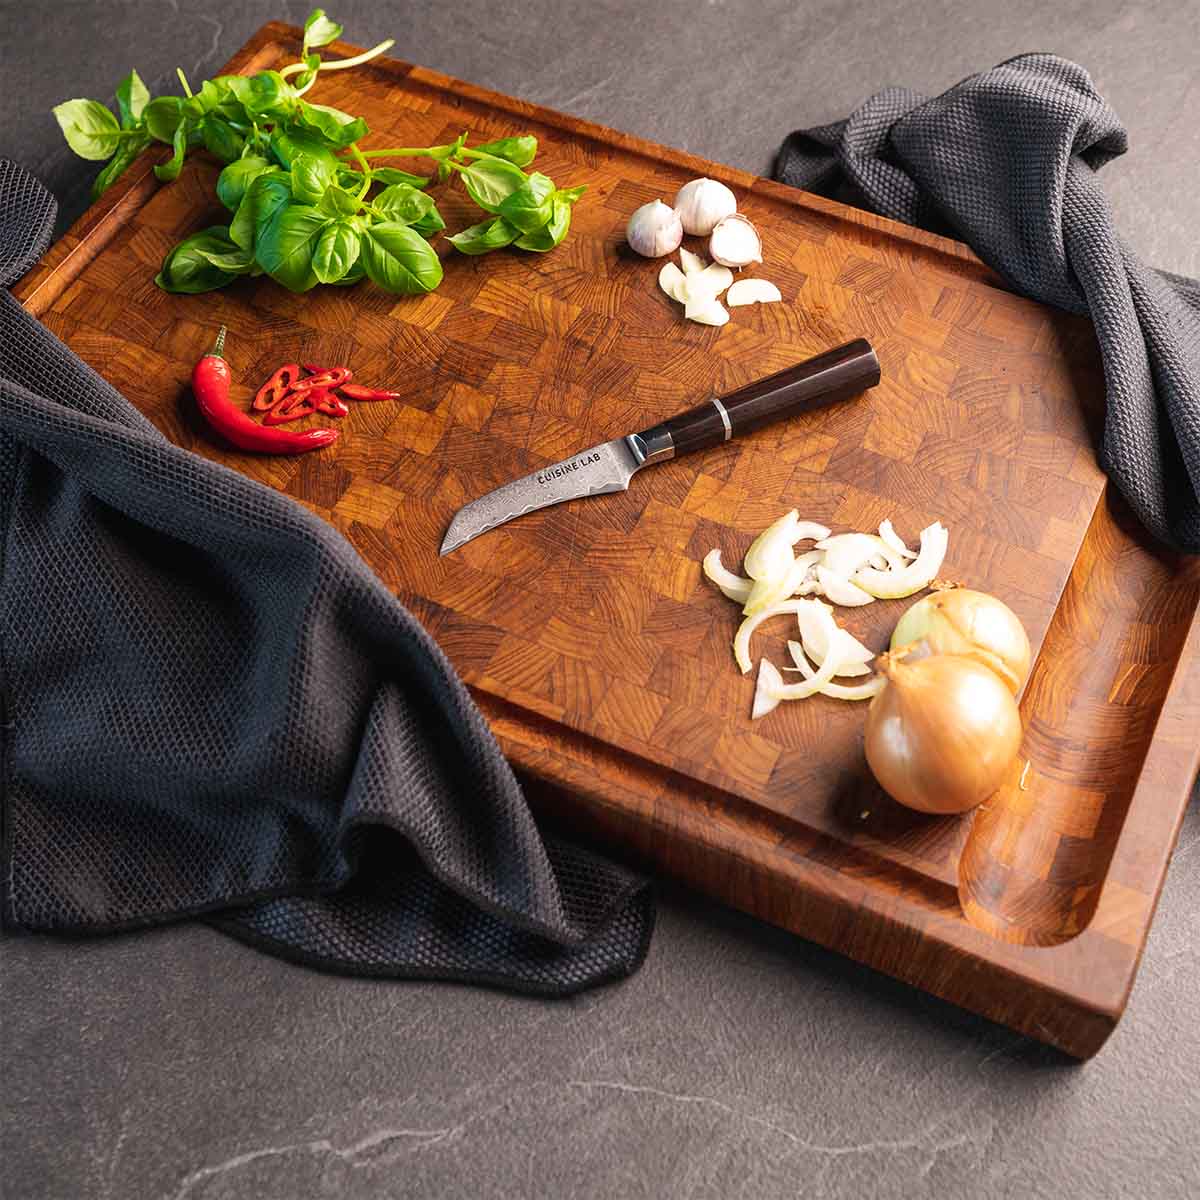 Legacy Allround Knivsæt - Kitchen Knives - Cuisine Lab Legacy Collection urtekniv. Den perfekte urtekniv. Urtekniven til alle de små opgaver i køkkenet. - cuisinelab